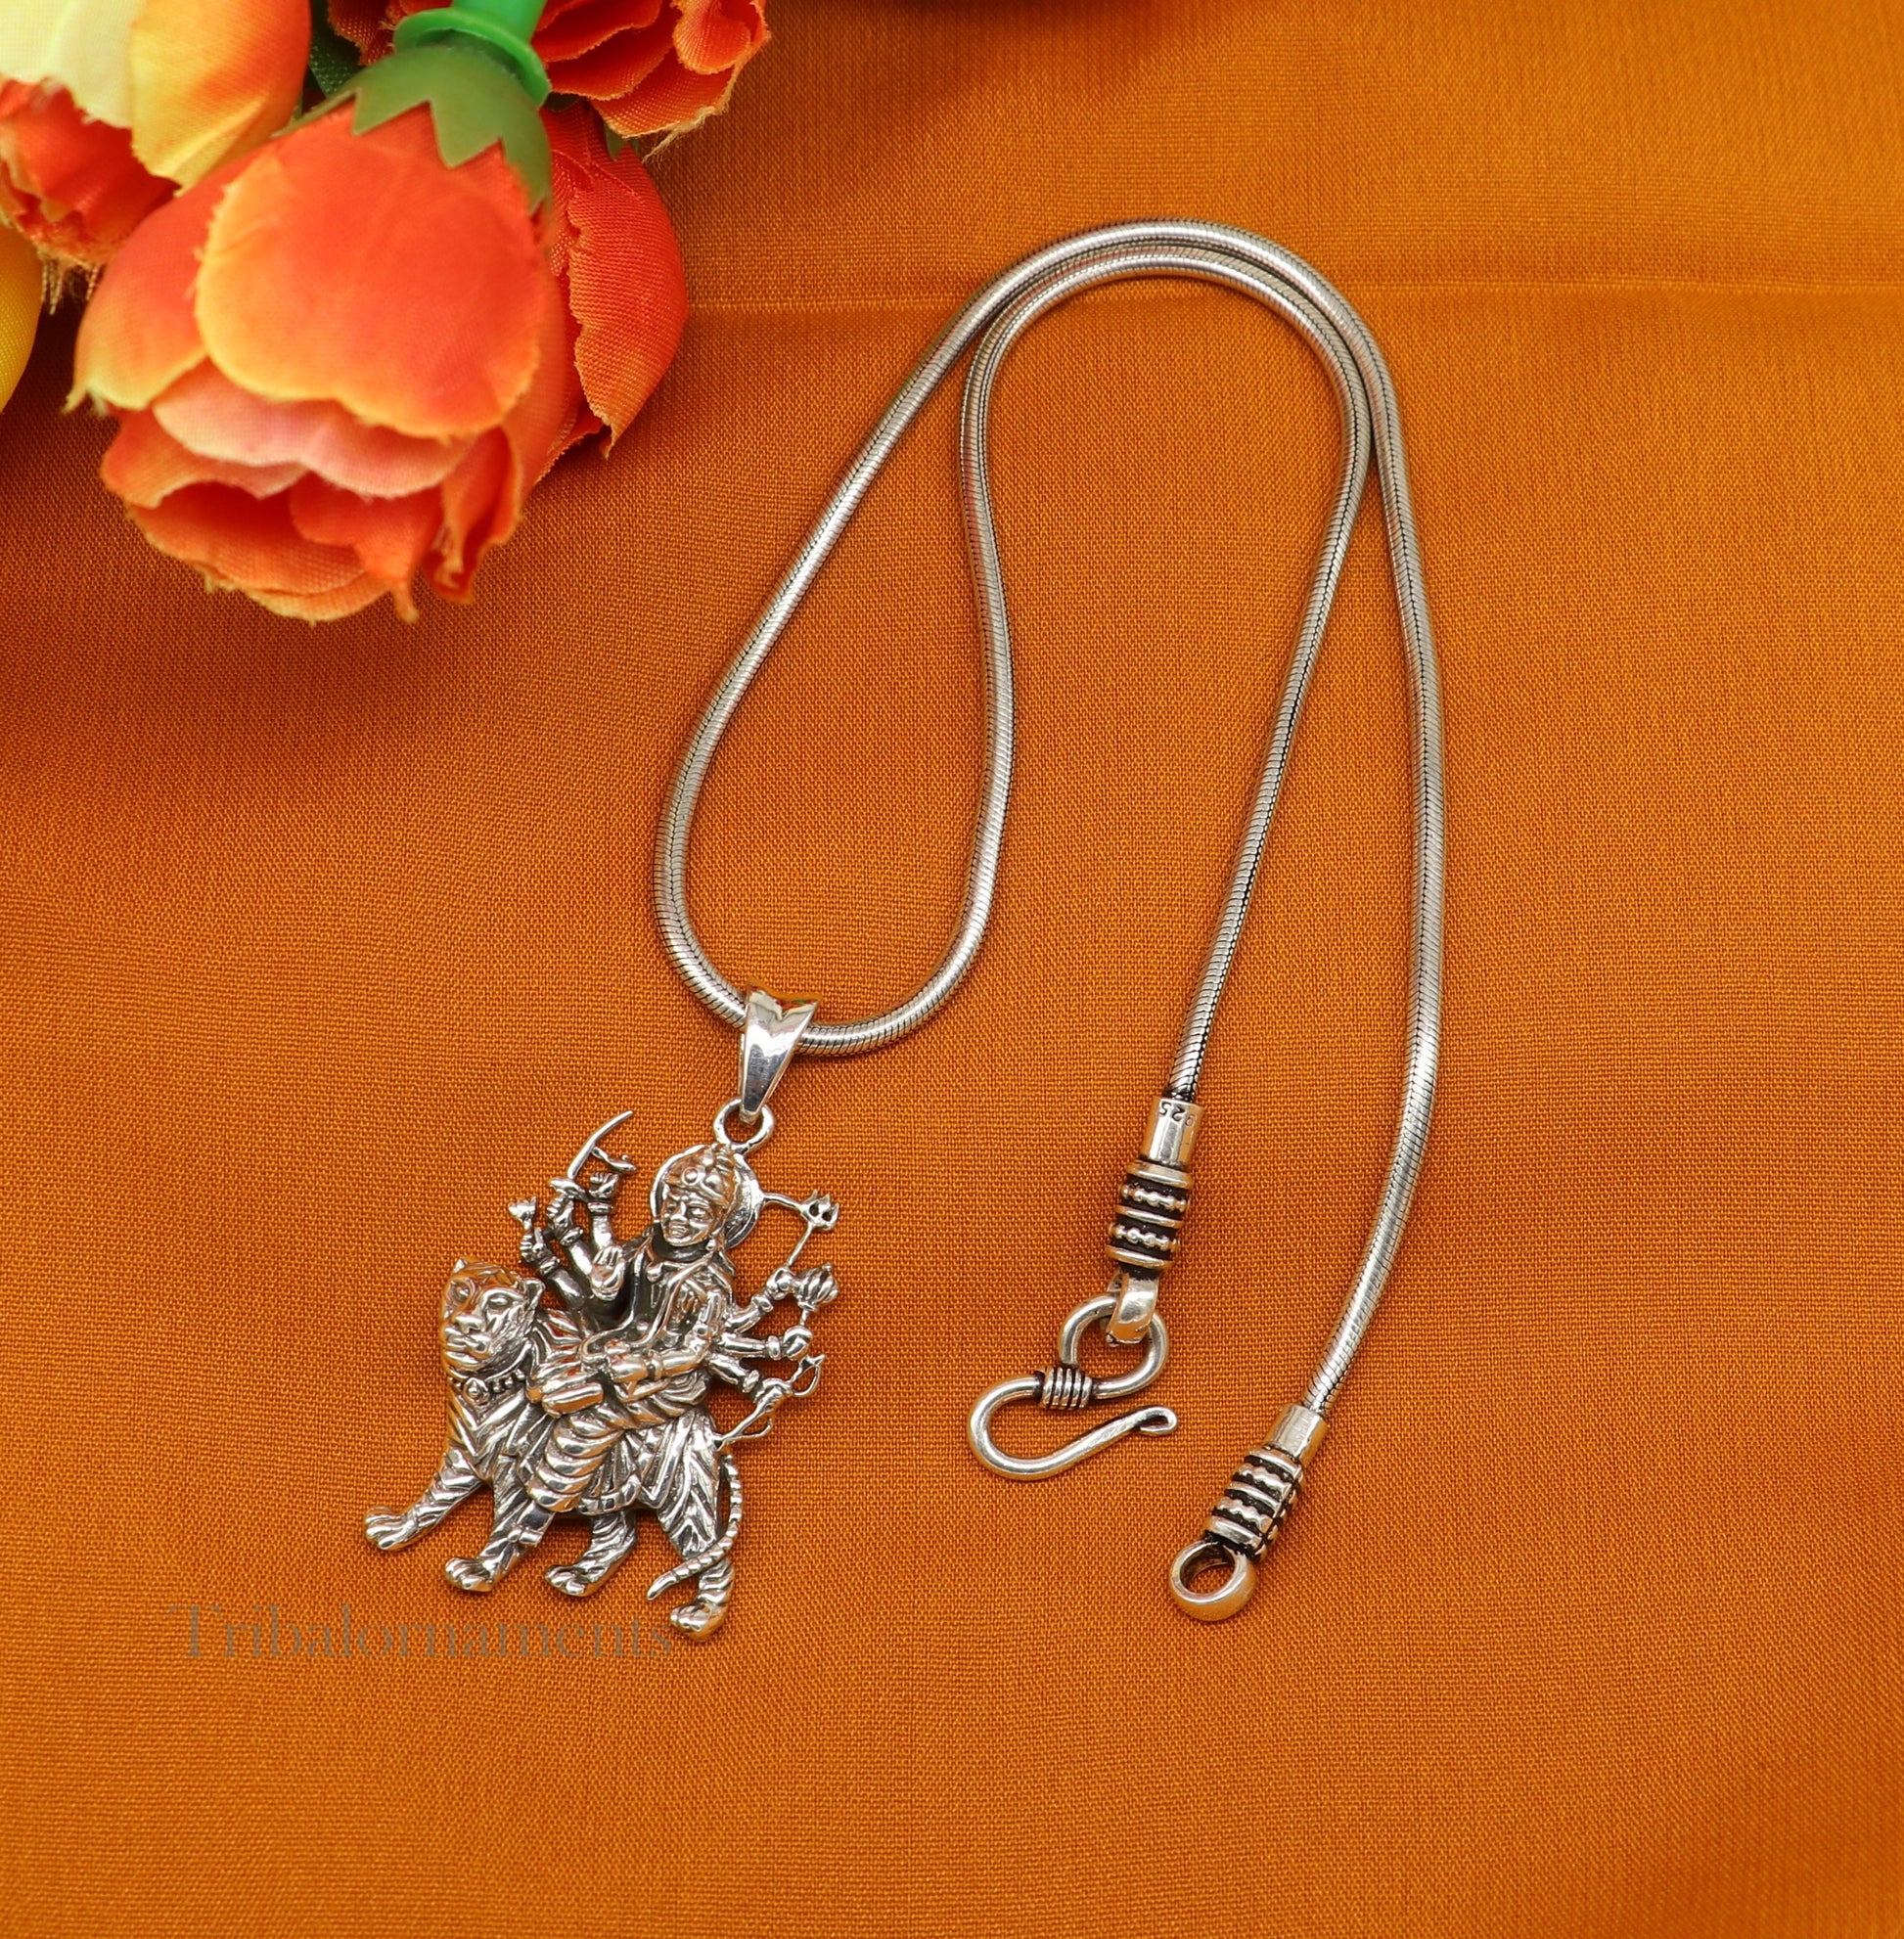 Divine 925 sterling silver Goddess bhawani/ Durga mataji with lion pendant, amazing unisex pendant locket goddess tribal jewelry ssp896 - TRIBAL ORNAMENTS